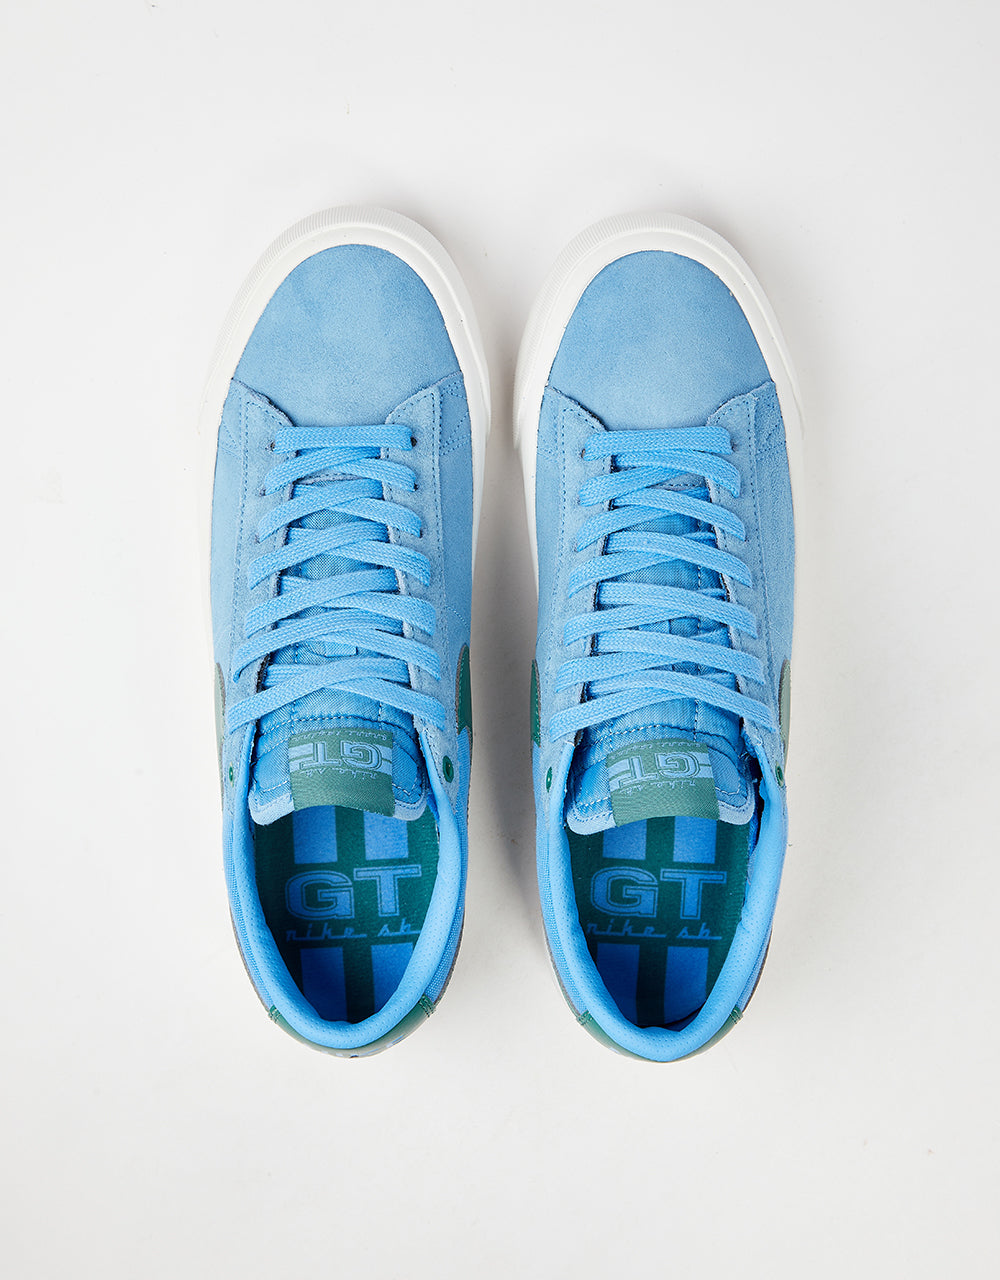 Nike SB Zoom Blazer Low Pro GT Skate Shoes - Univ Blue/Bicoastal-Univ Blue-Summit White-Bicoastal